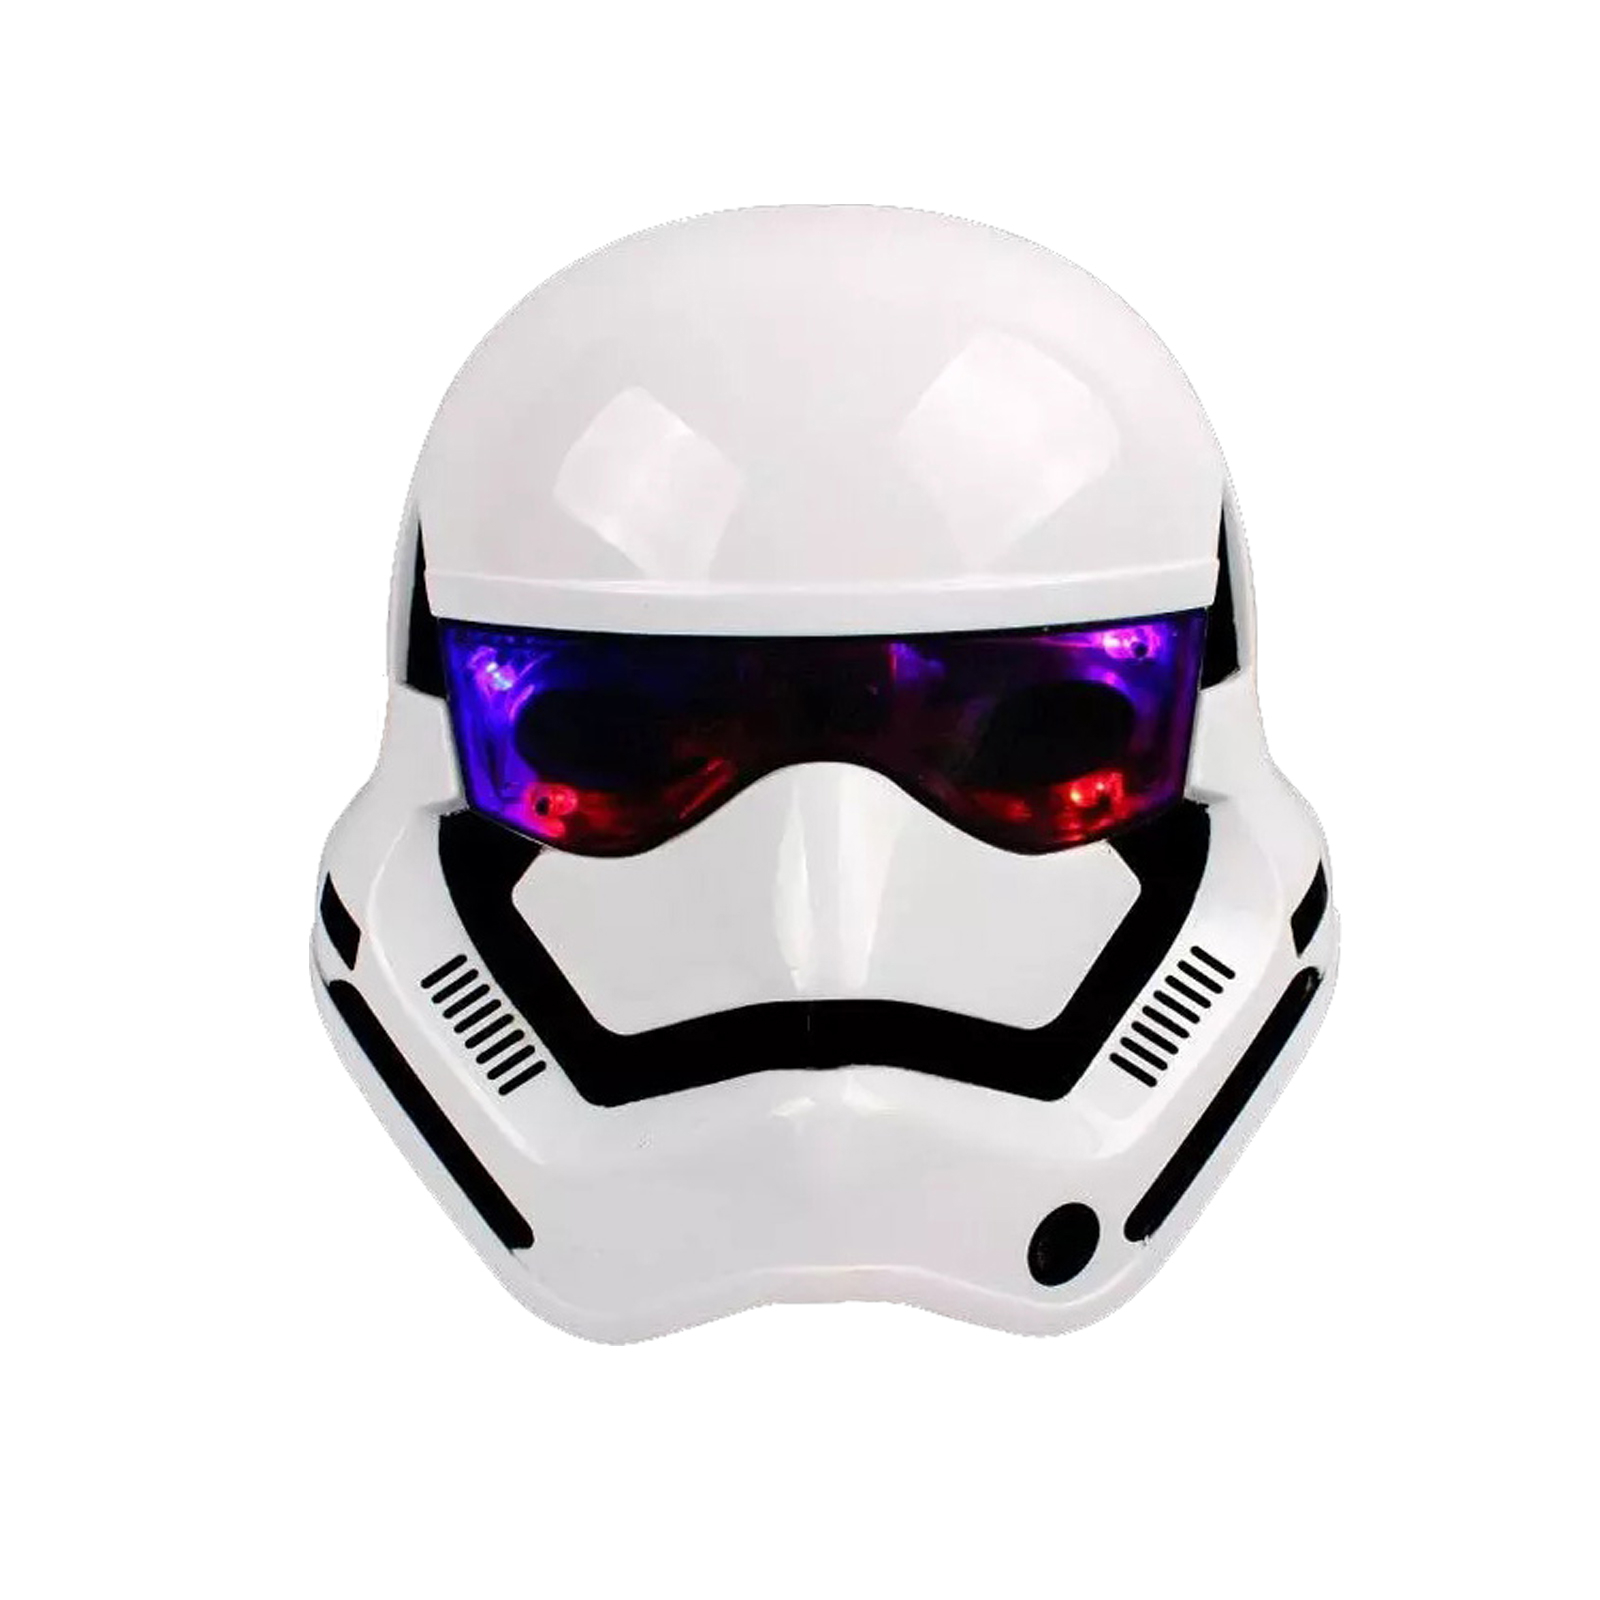 Masca Stormtrooper pentru copii, LED, marime universala, alba